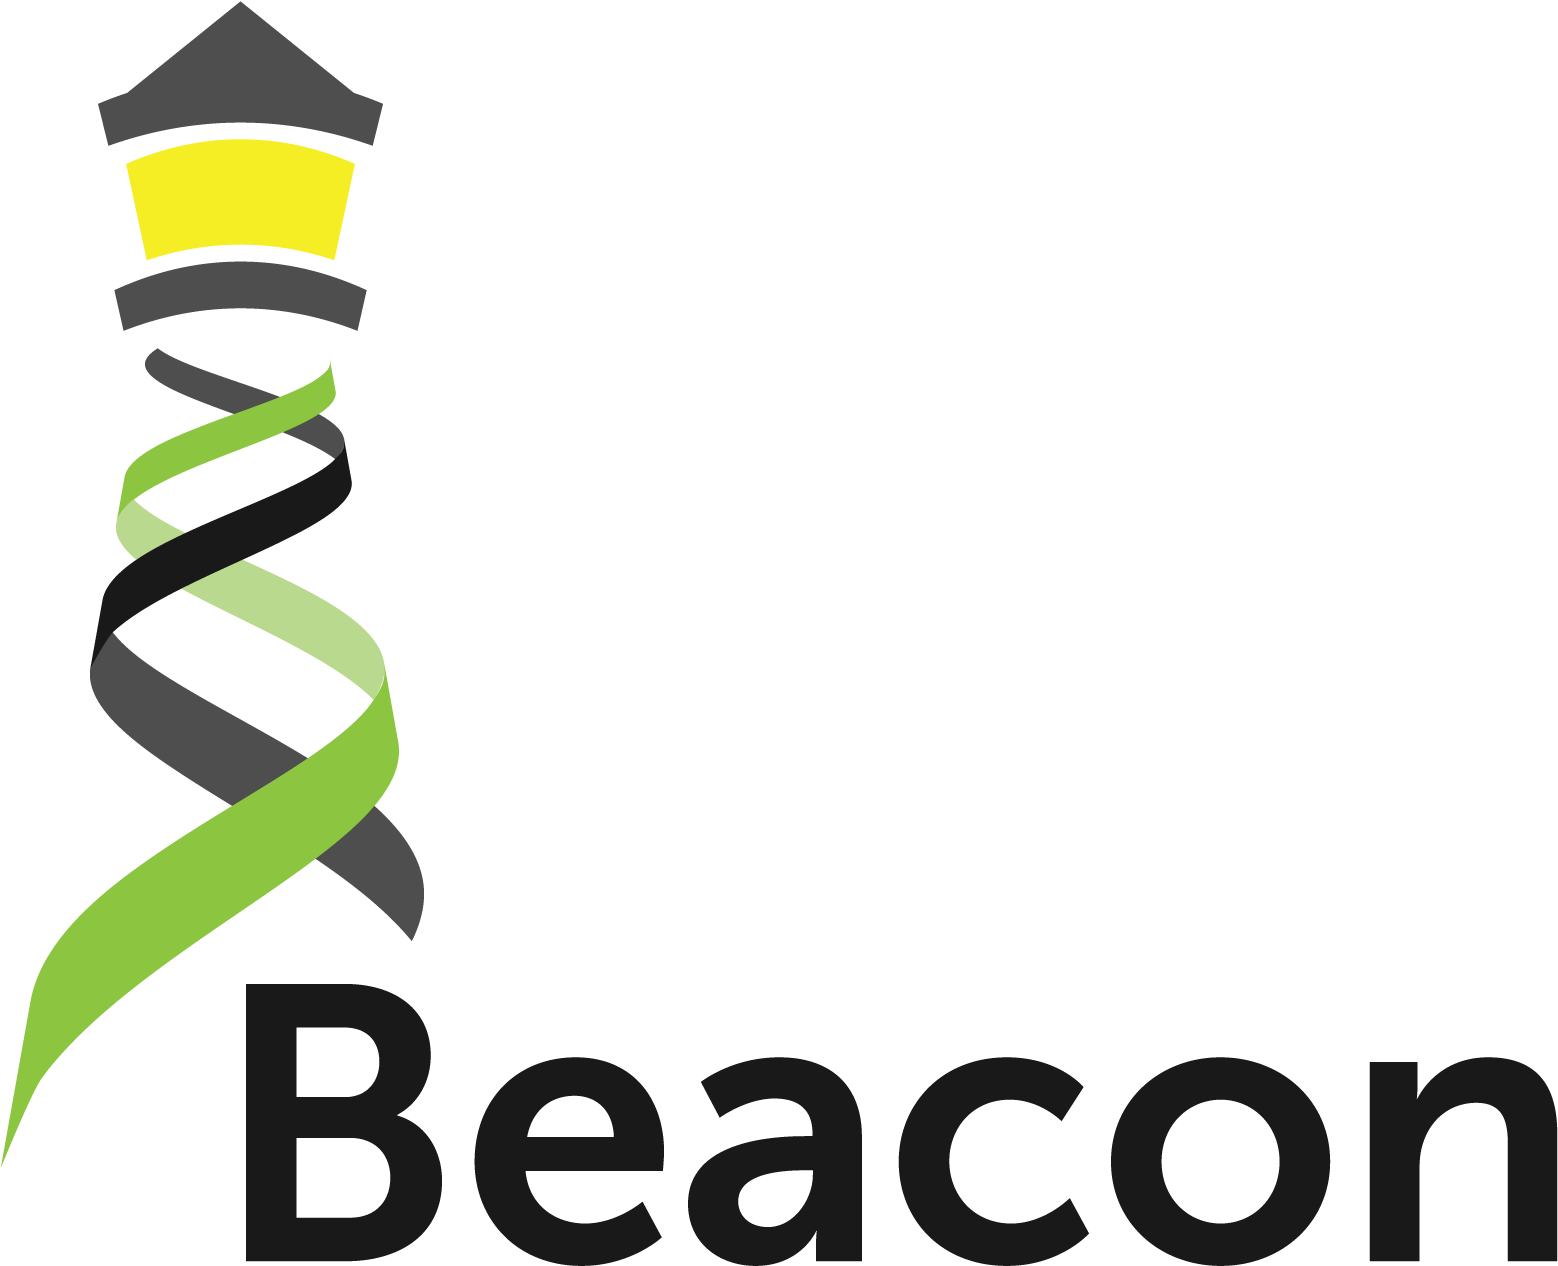 Project Logo - Genomics Beacon (1620x1388)